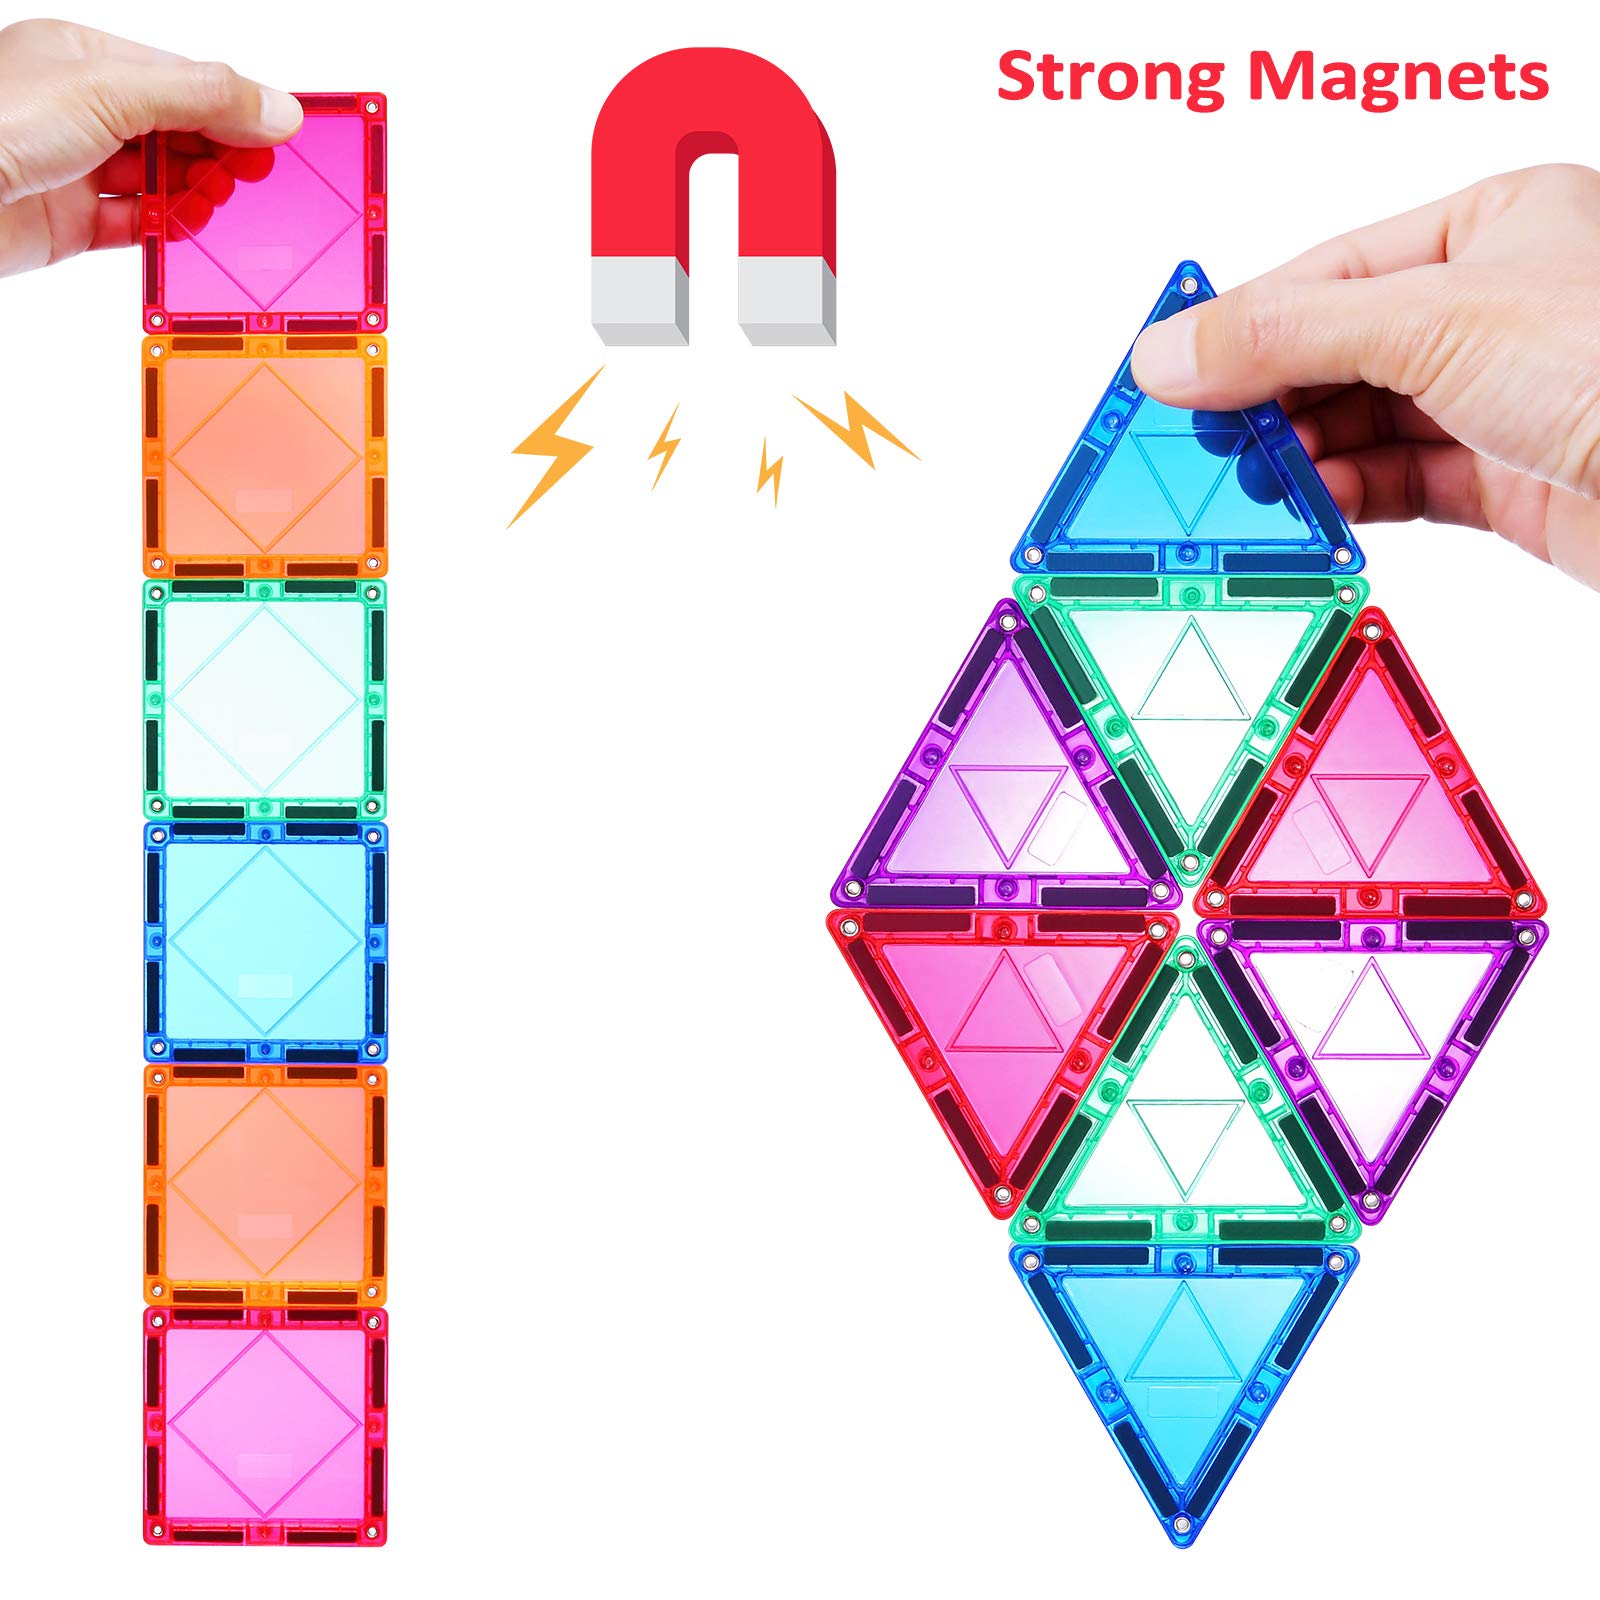 Magnetic Tiles for Kids 3D Magnet Building Tiles Set STEM Learning Toys Magnetic Toys Gift for 3+ Year Old Boys and Girls